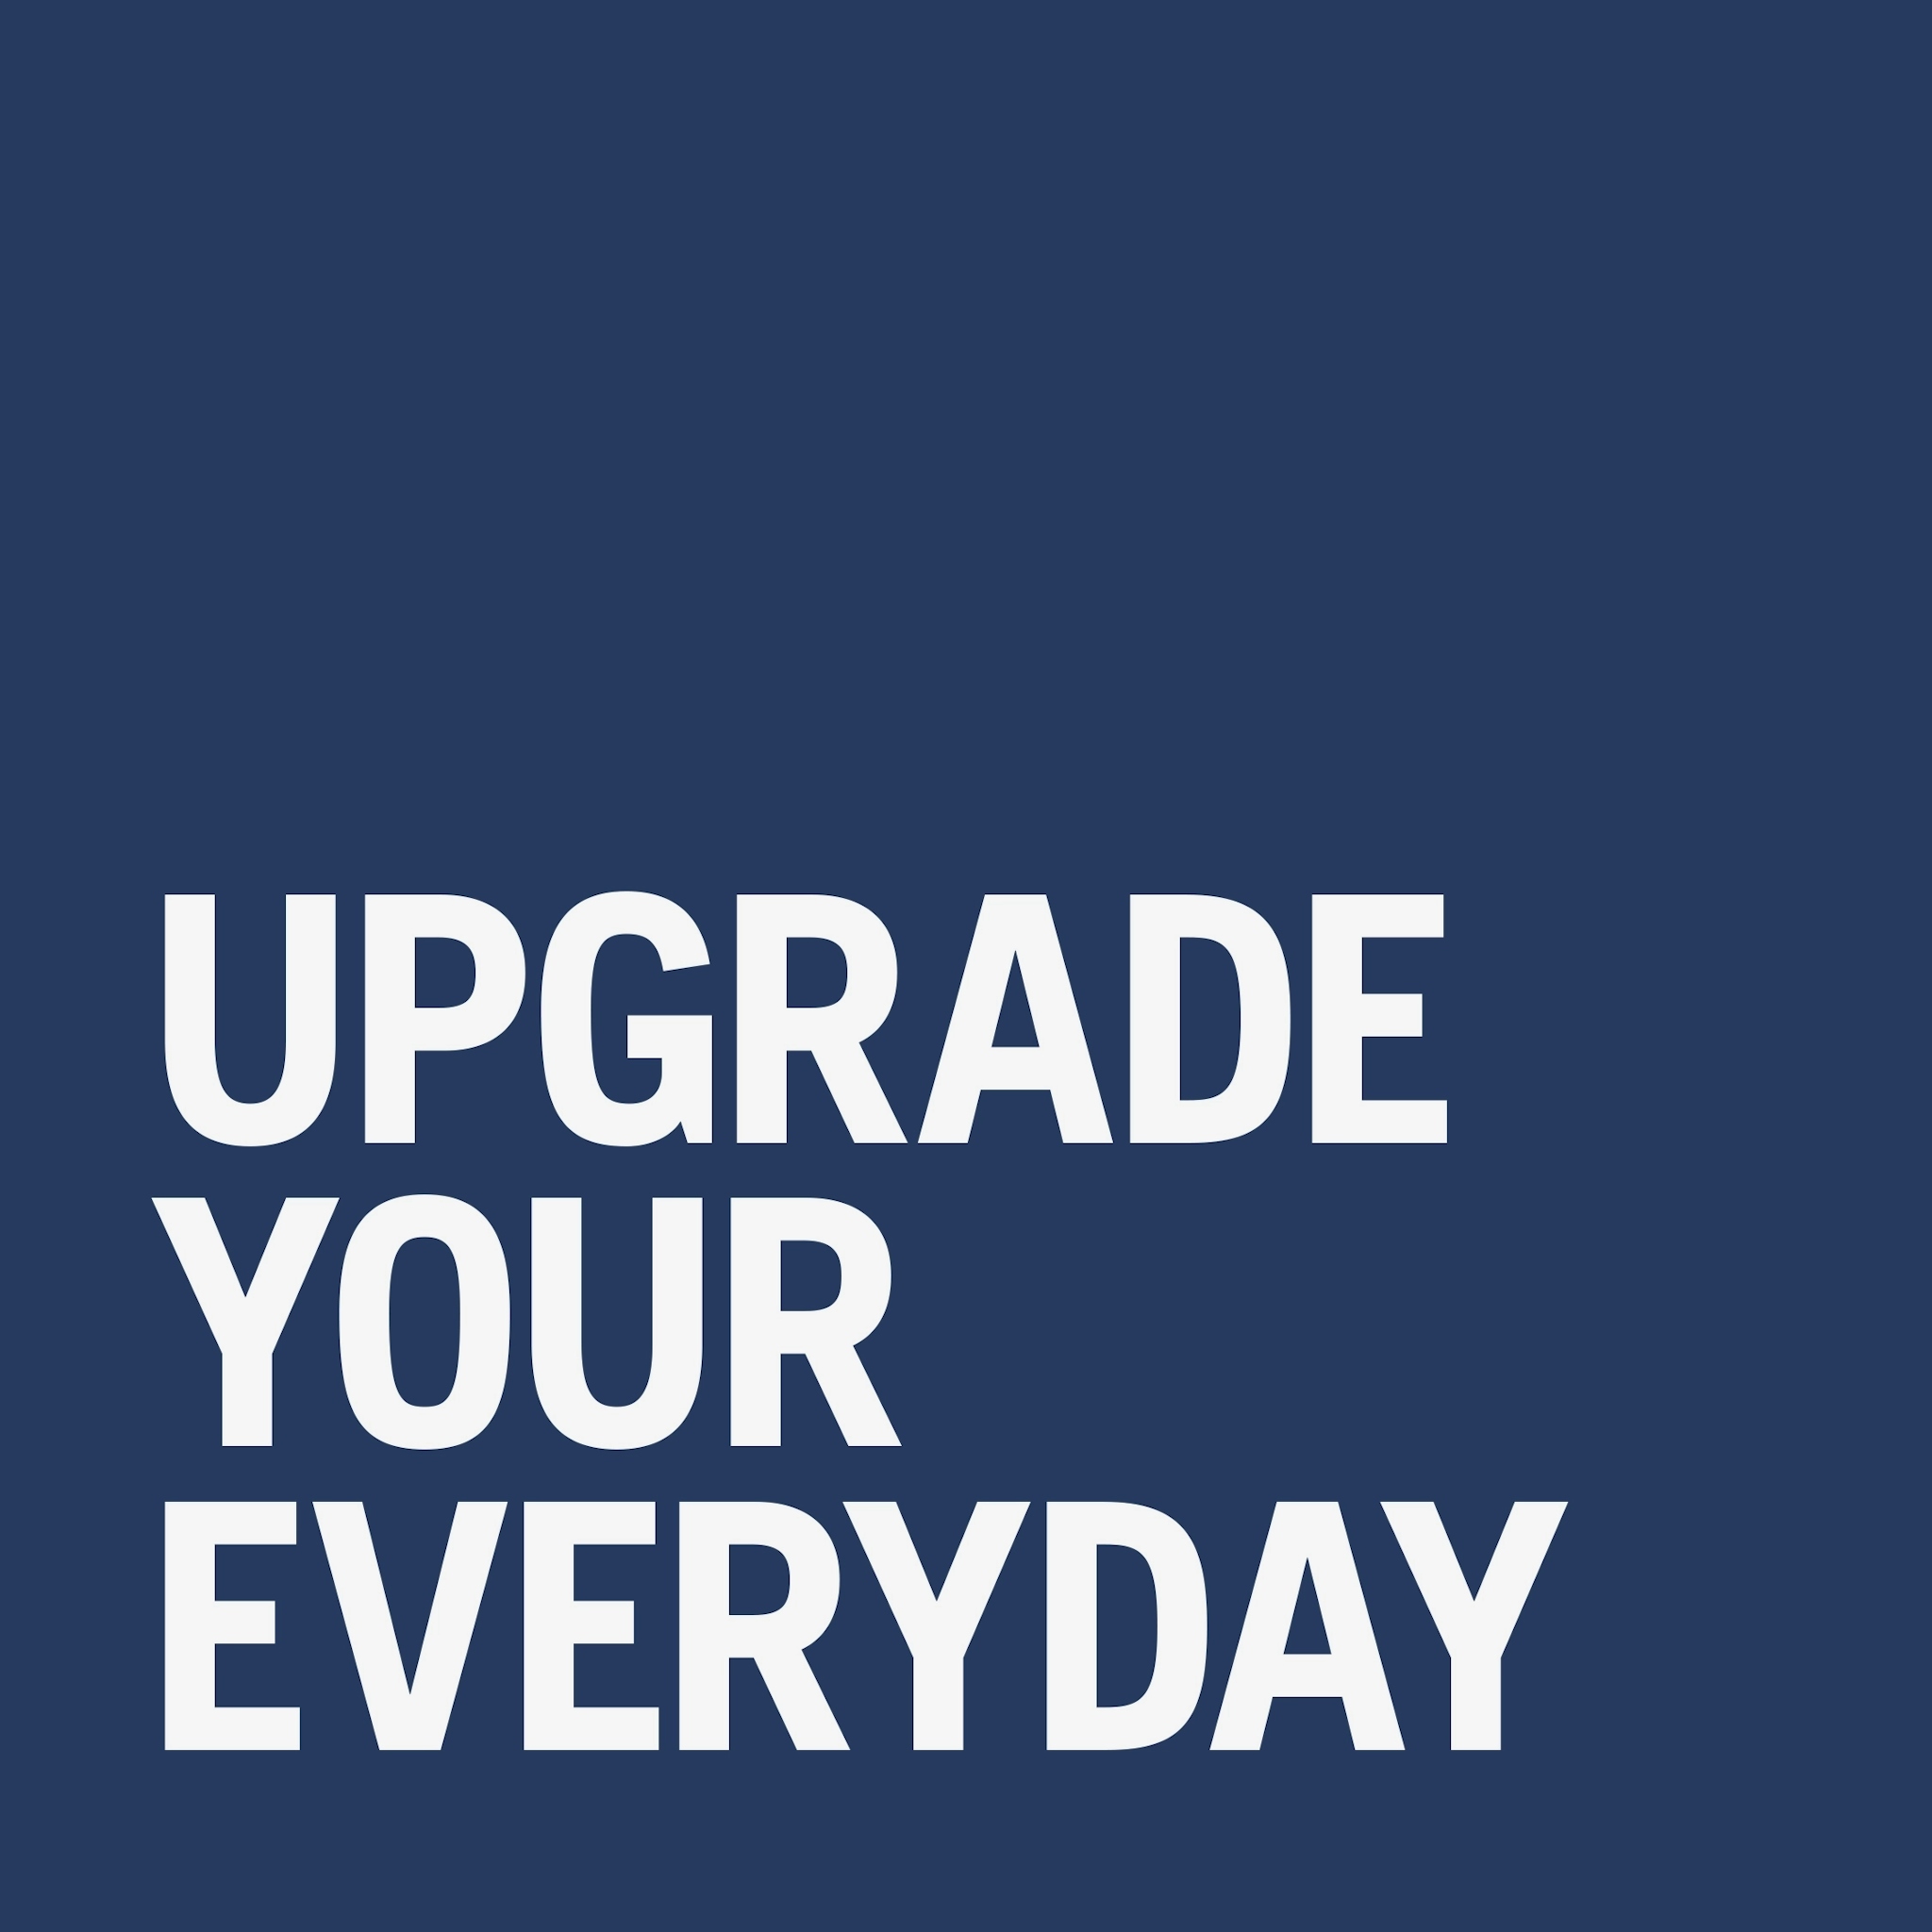 Blå bakgrund med vit text "Upgrade Your Everyday"